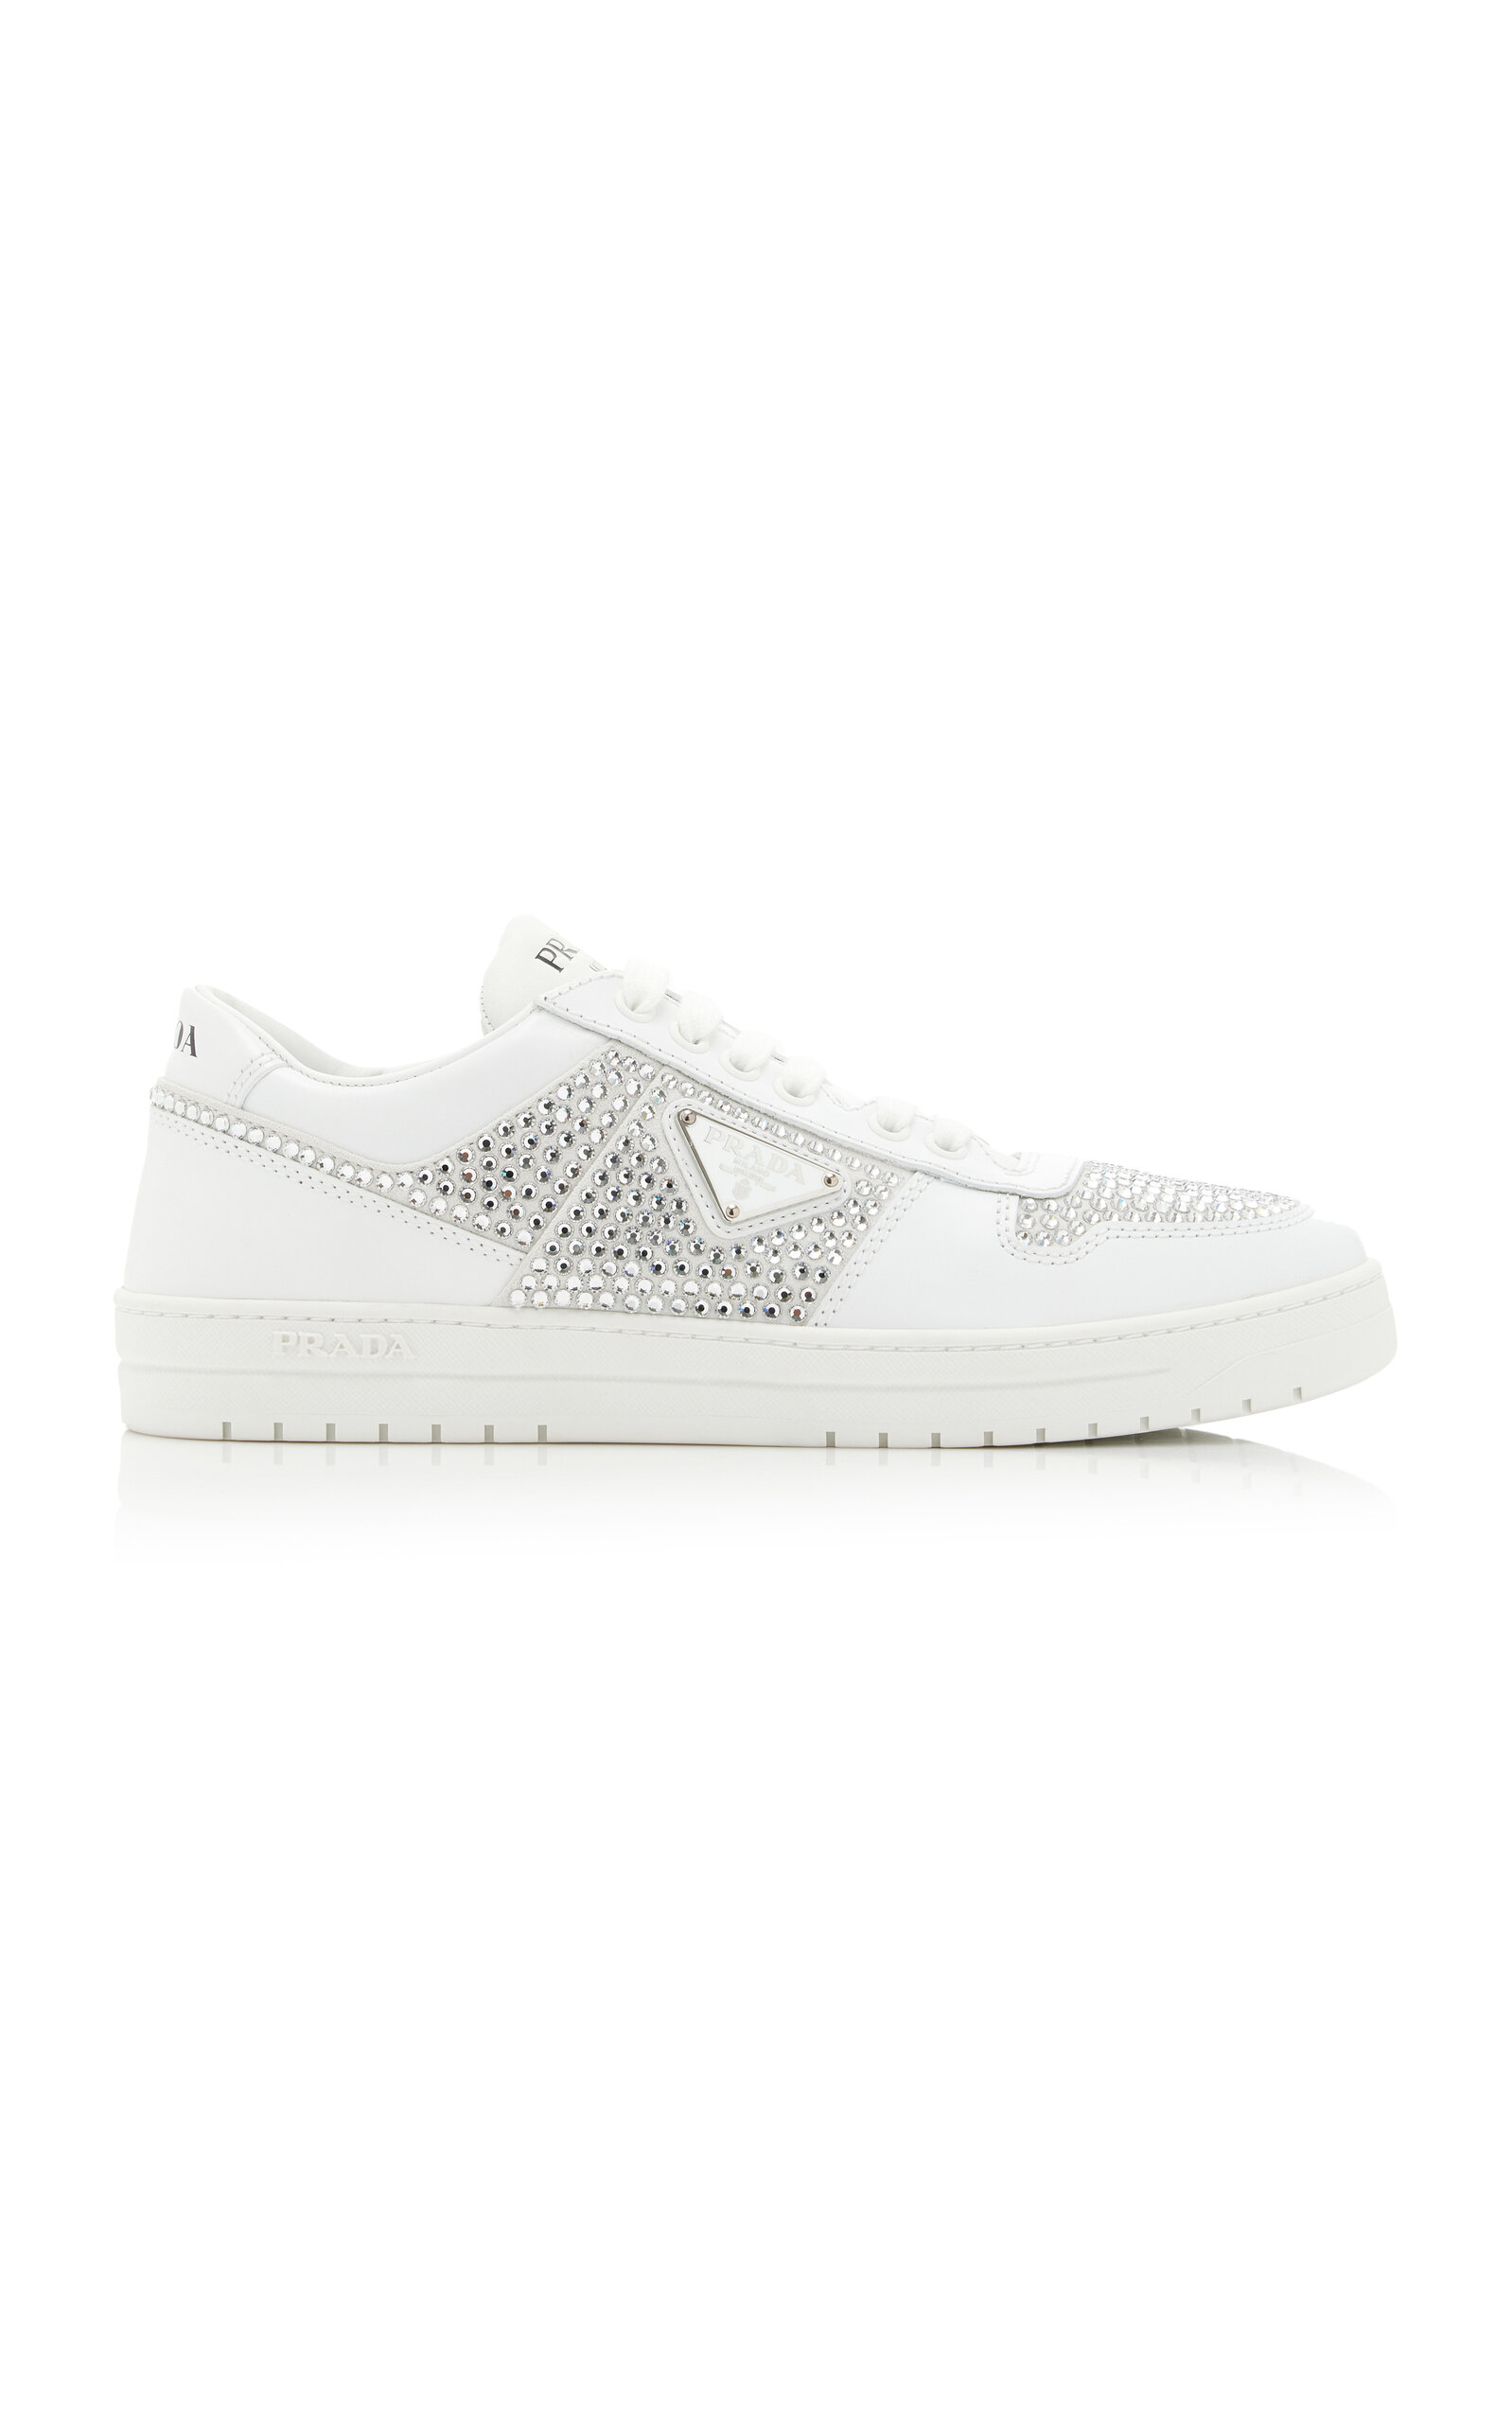 Prada - Downtown Crystal-Embellished Leather Sneakers - White - IT 40 - Moda Operandi